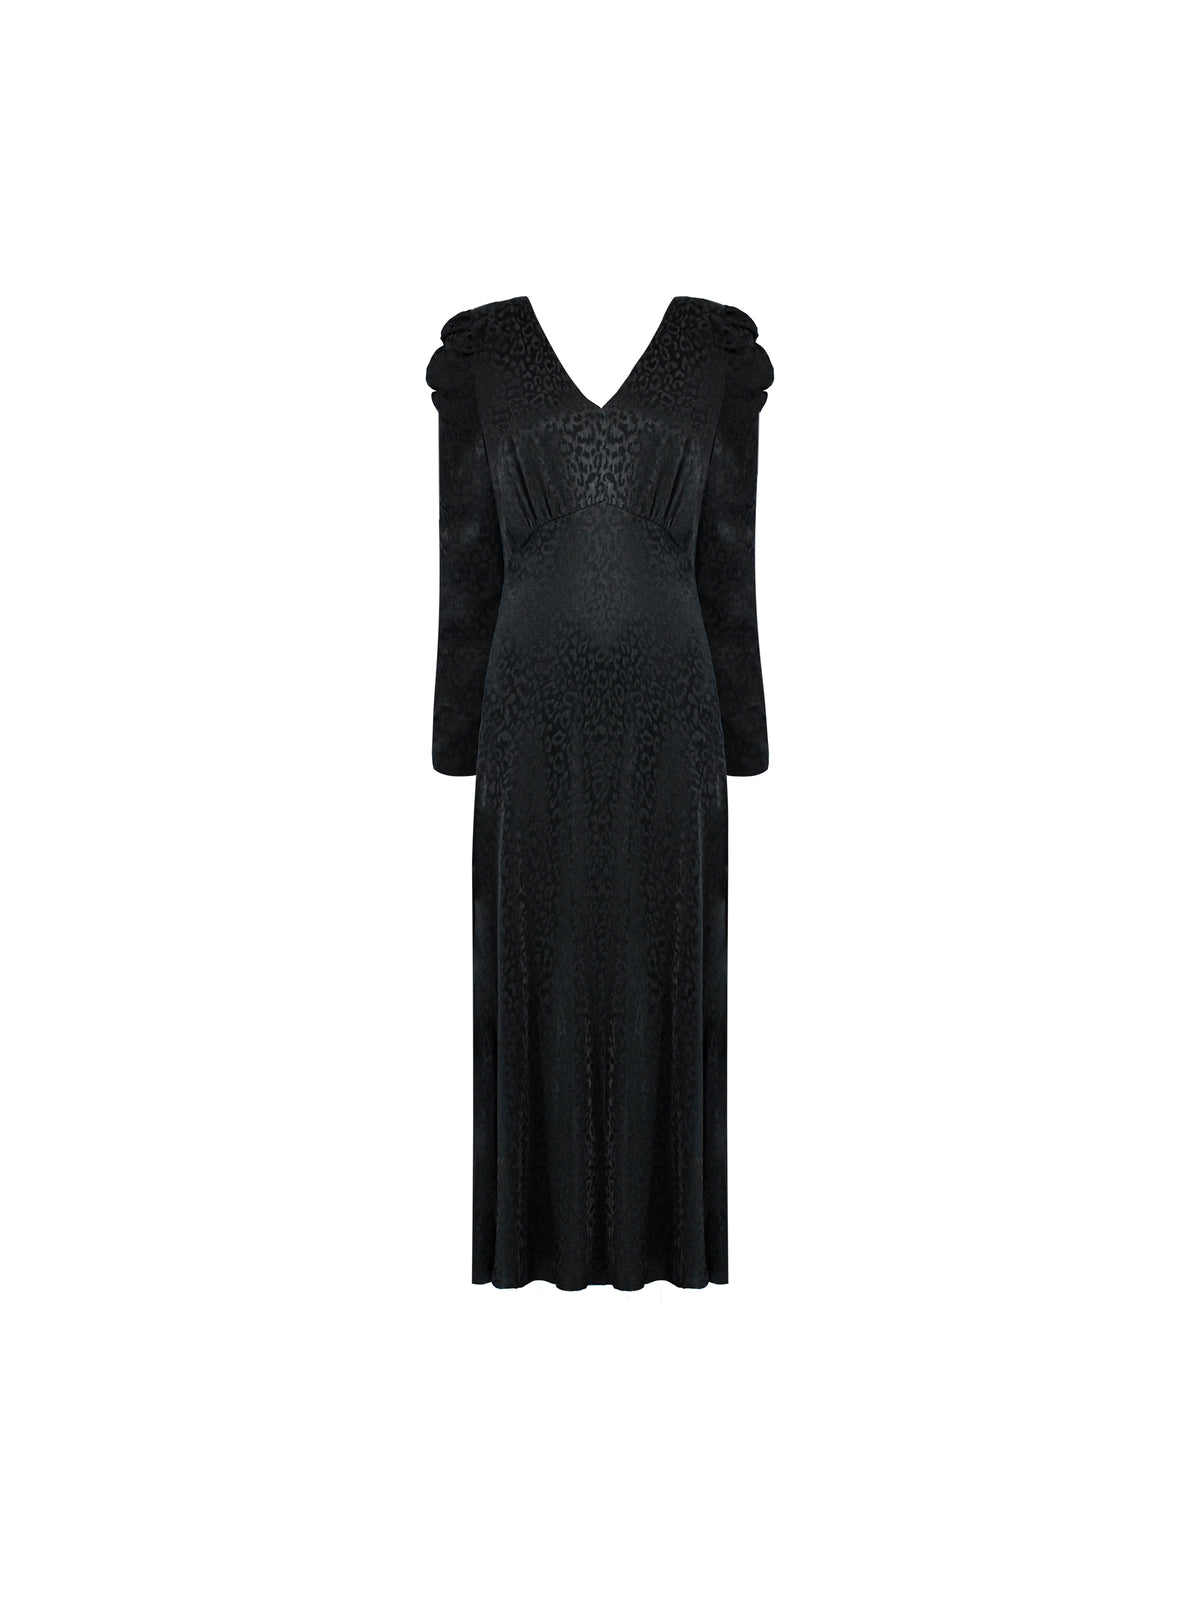 Petite Black Satin Jacquard Puff Sleeve Dress